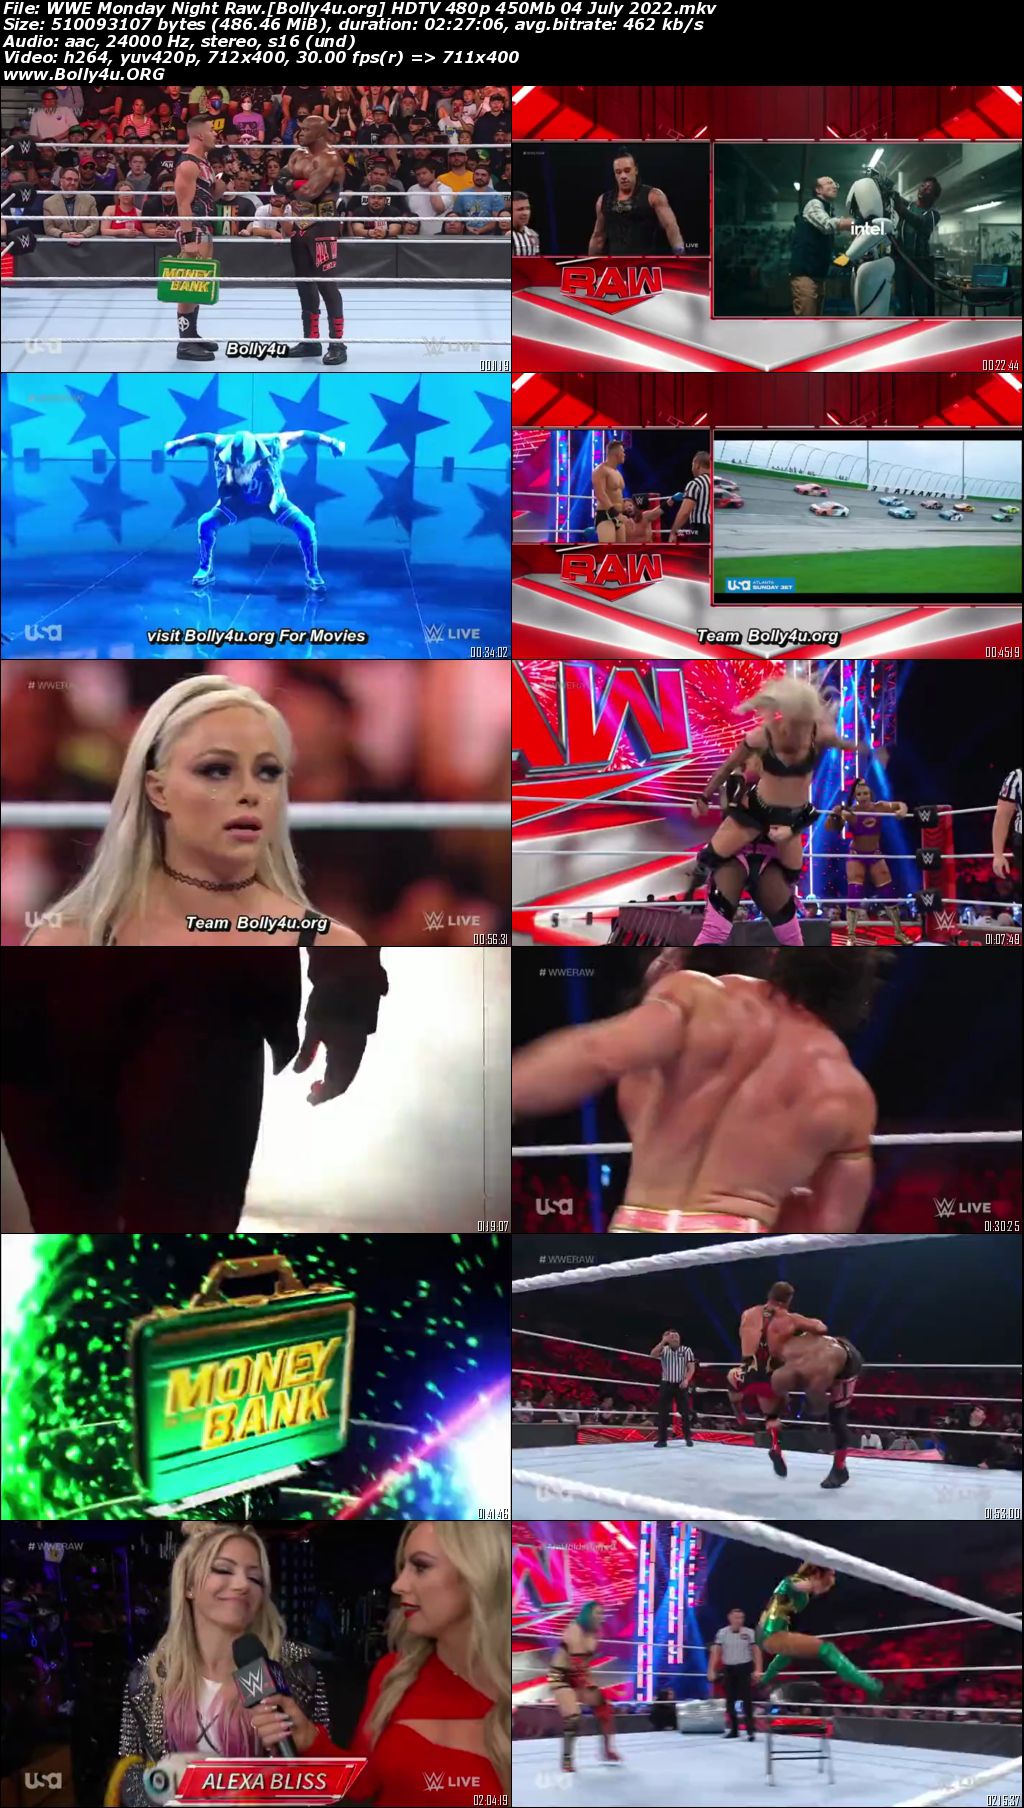 WWE Monday Night Raw HDTV 480p 450Mb 04 July 2022 Download